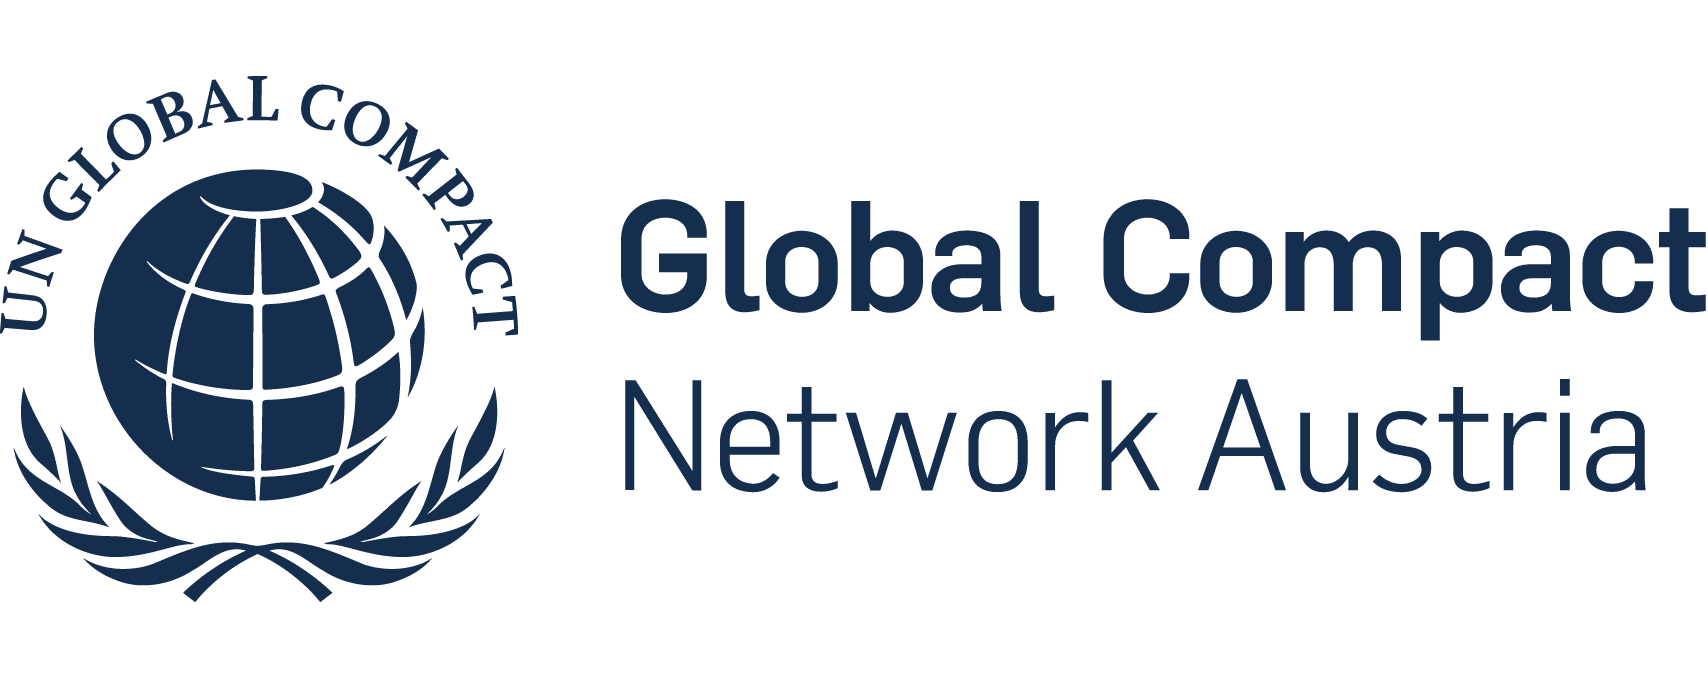 Global Compact Network Austria